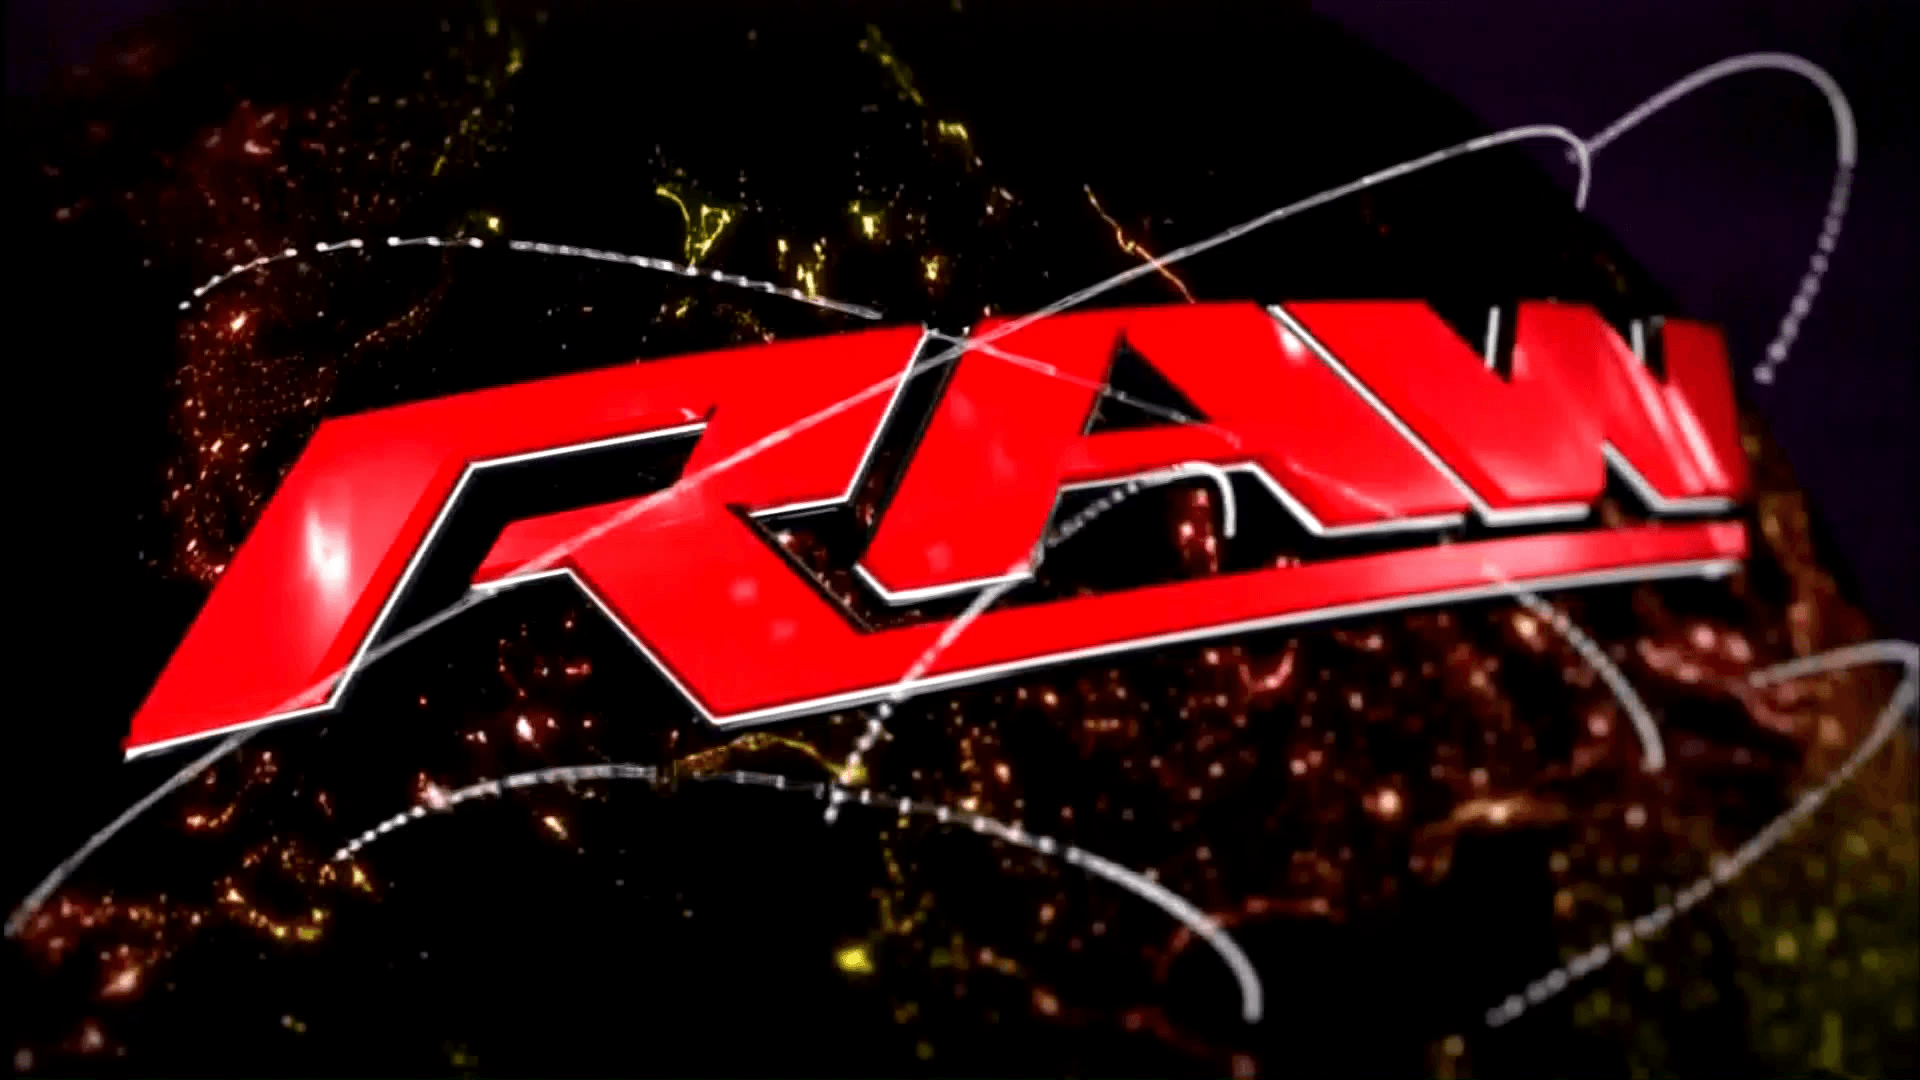 WWE Raw Wallpaper, 49 Widescreen High Resolution Wallpaper of WWE Raw